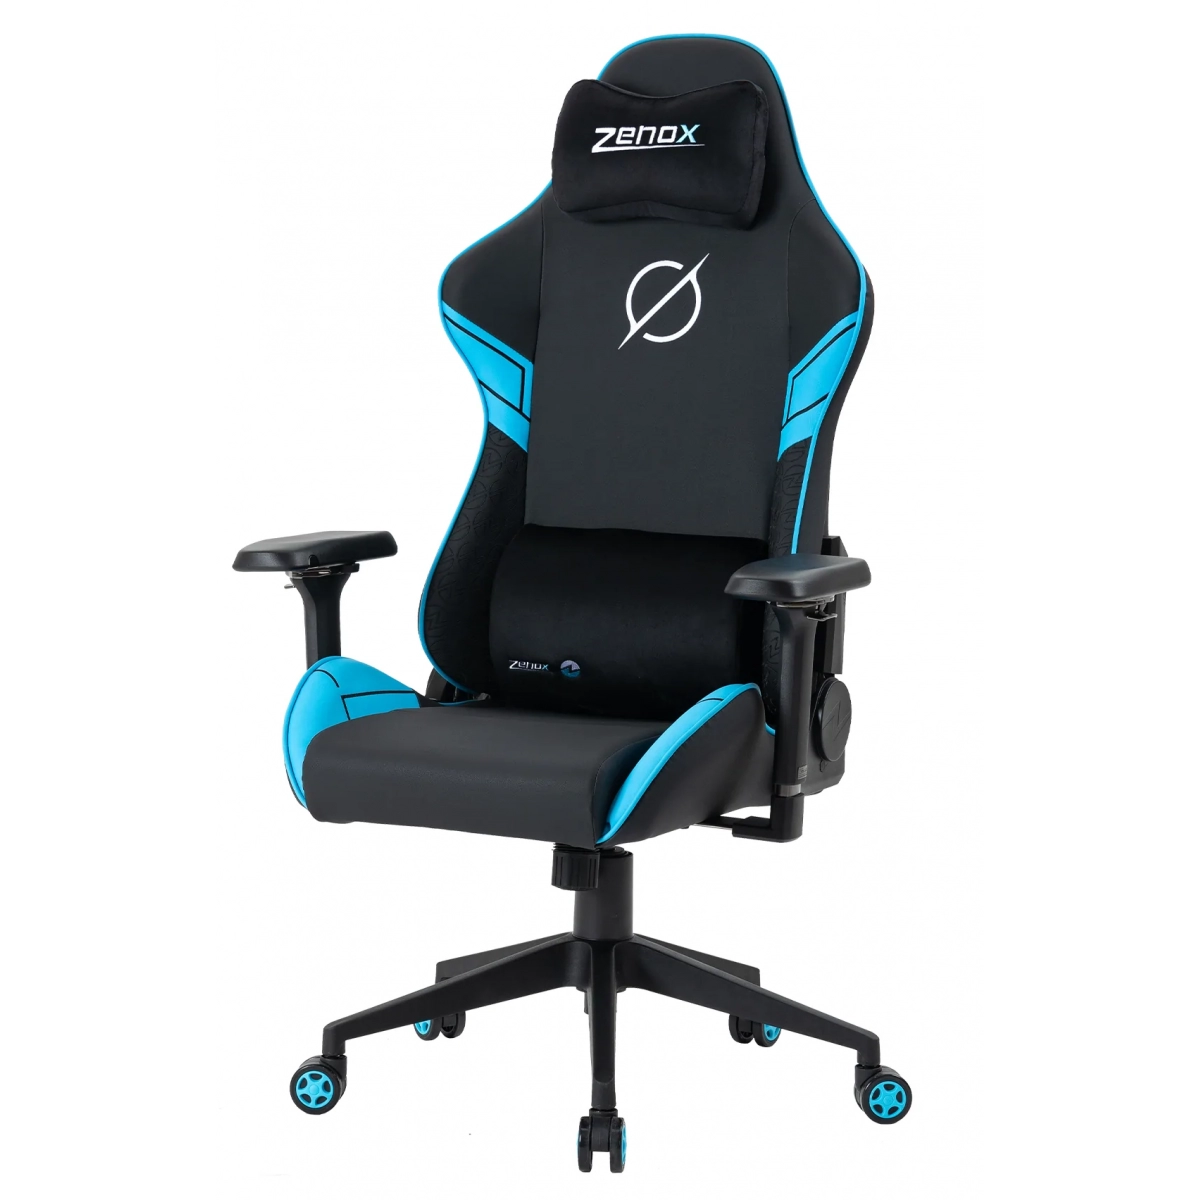 Zenox Saturn-MK2 Gaming Chair (Leather/Sky Blue)